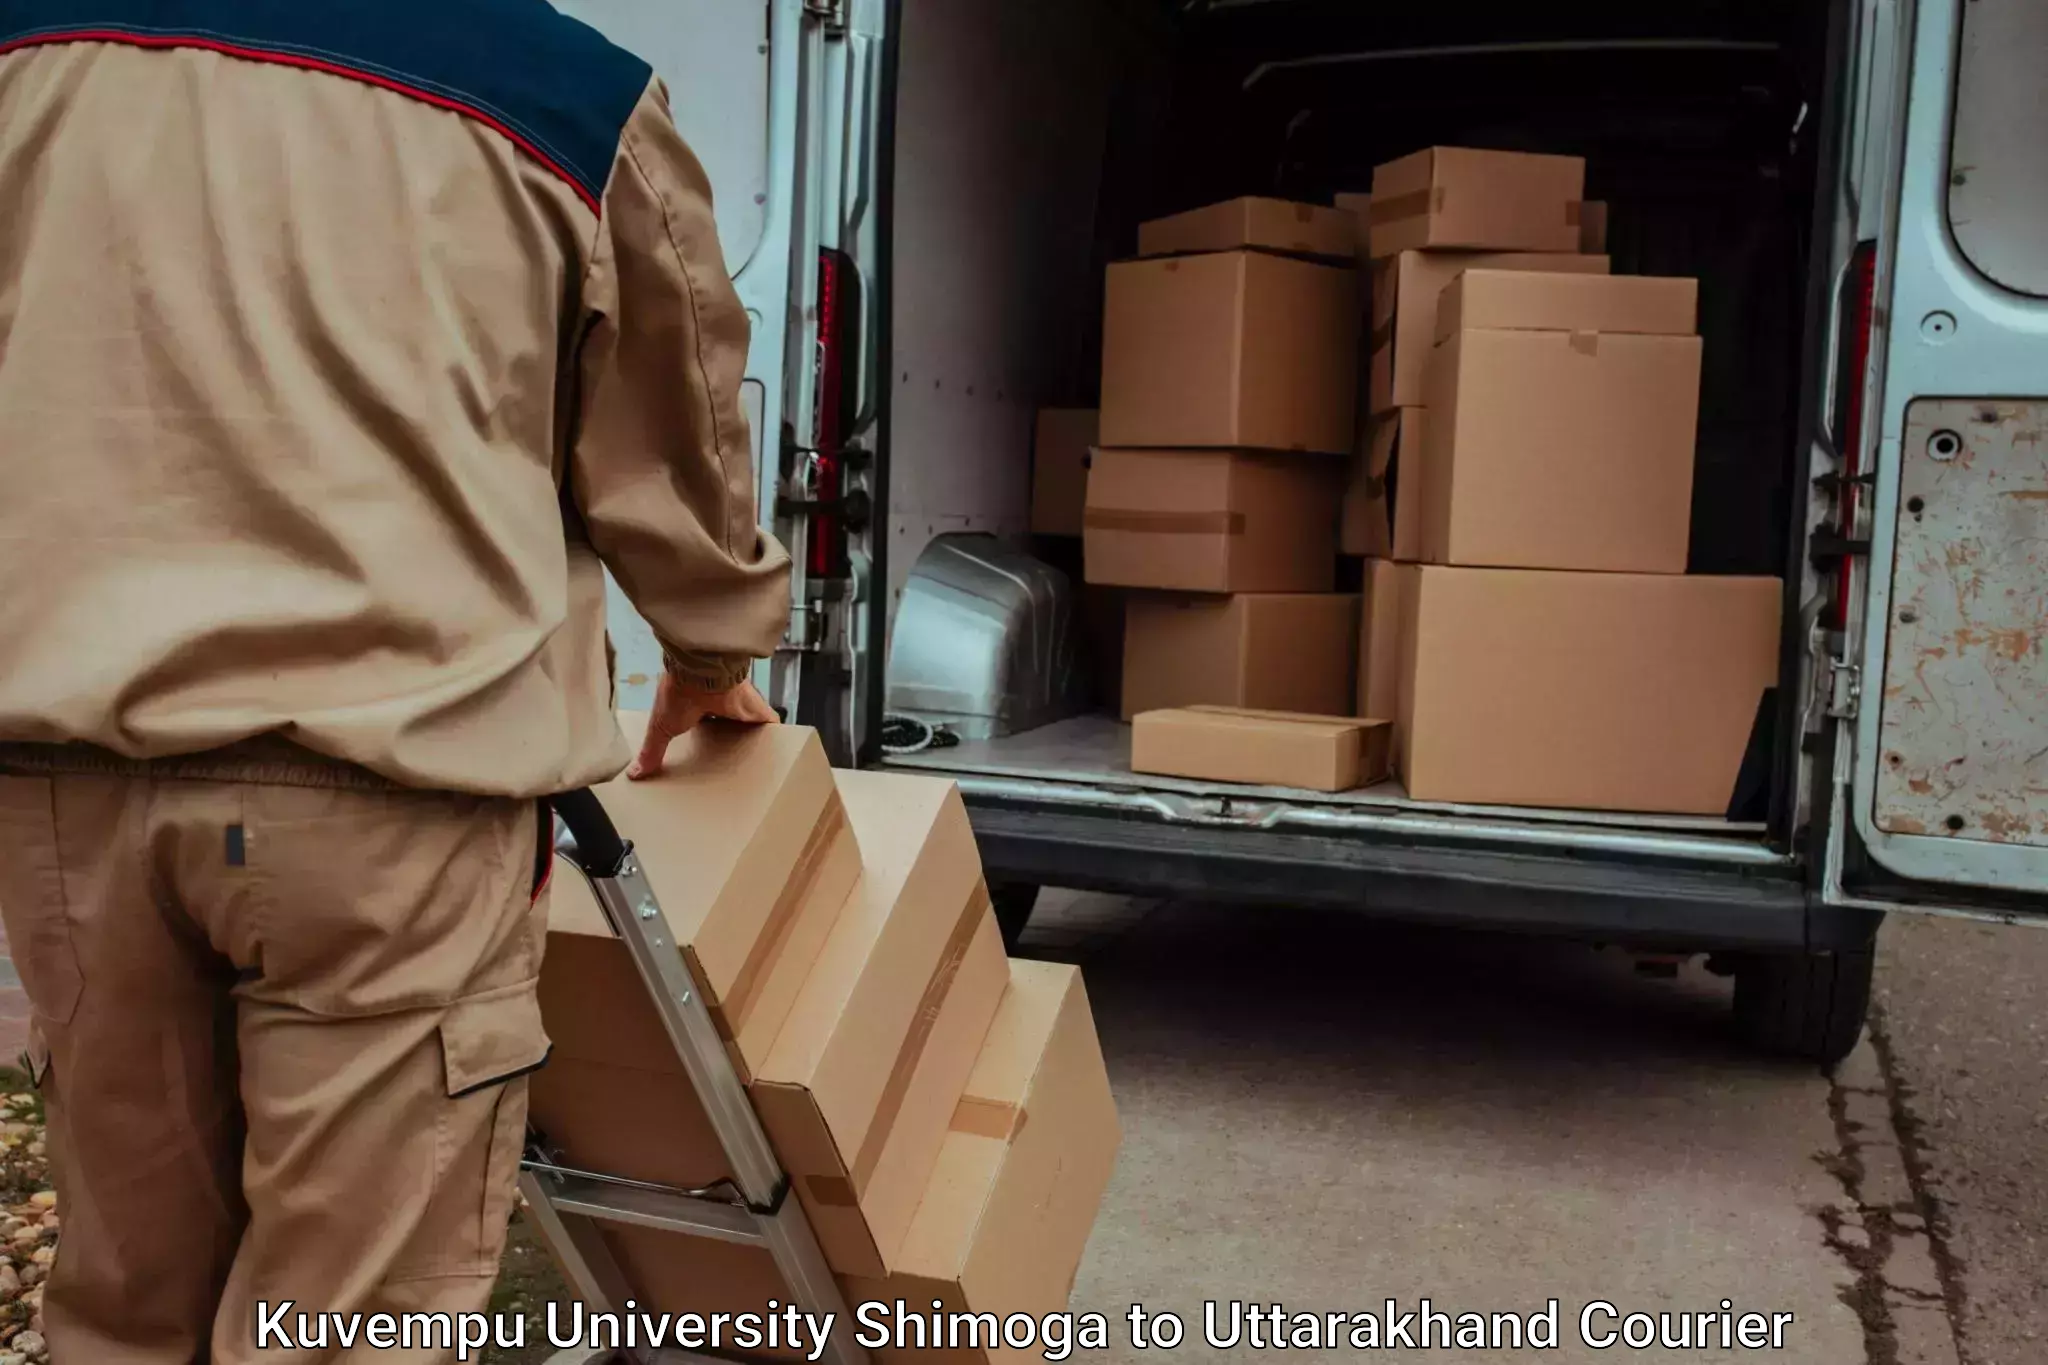 Furniture delivery service Kuvempu University Shimoga to Rudraprayag